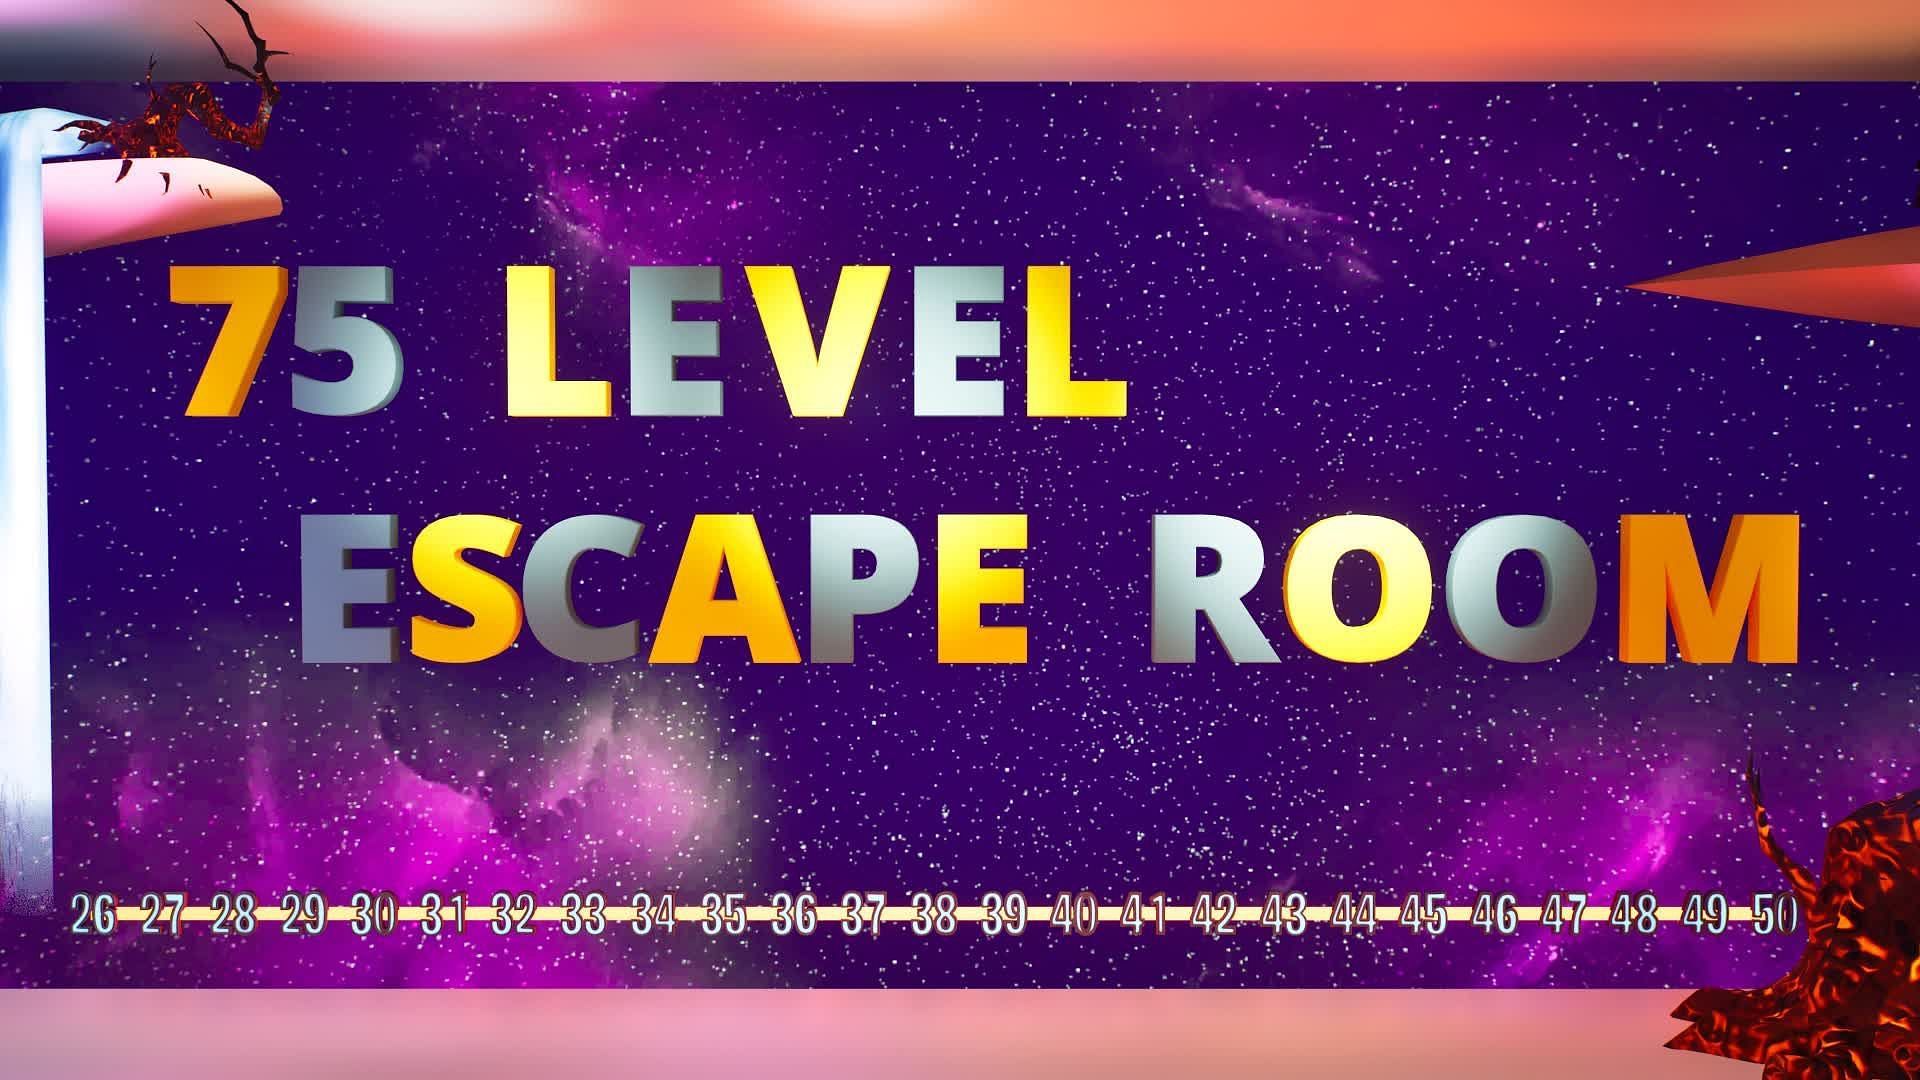 75 level escape room in Fortnite (Image via Epic Games)